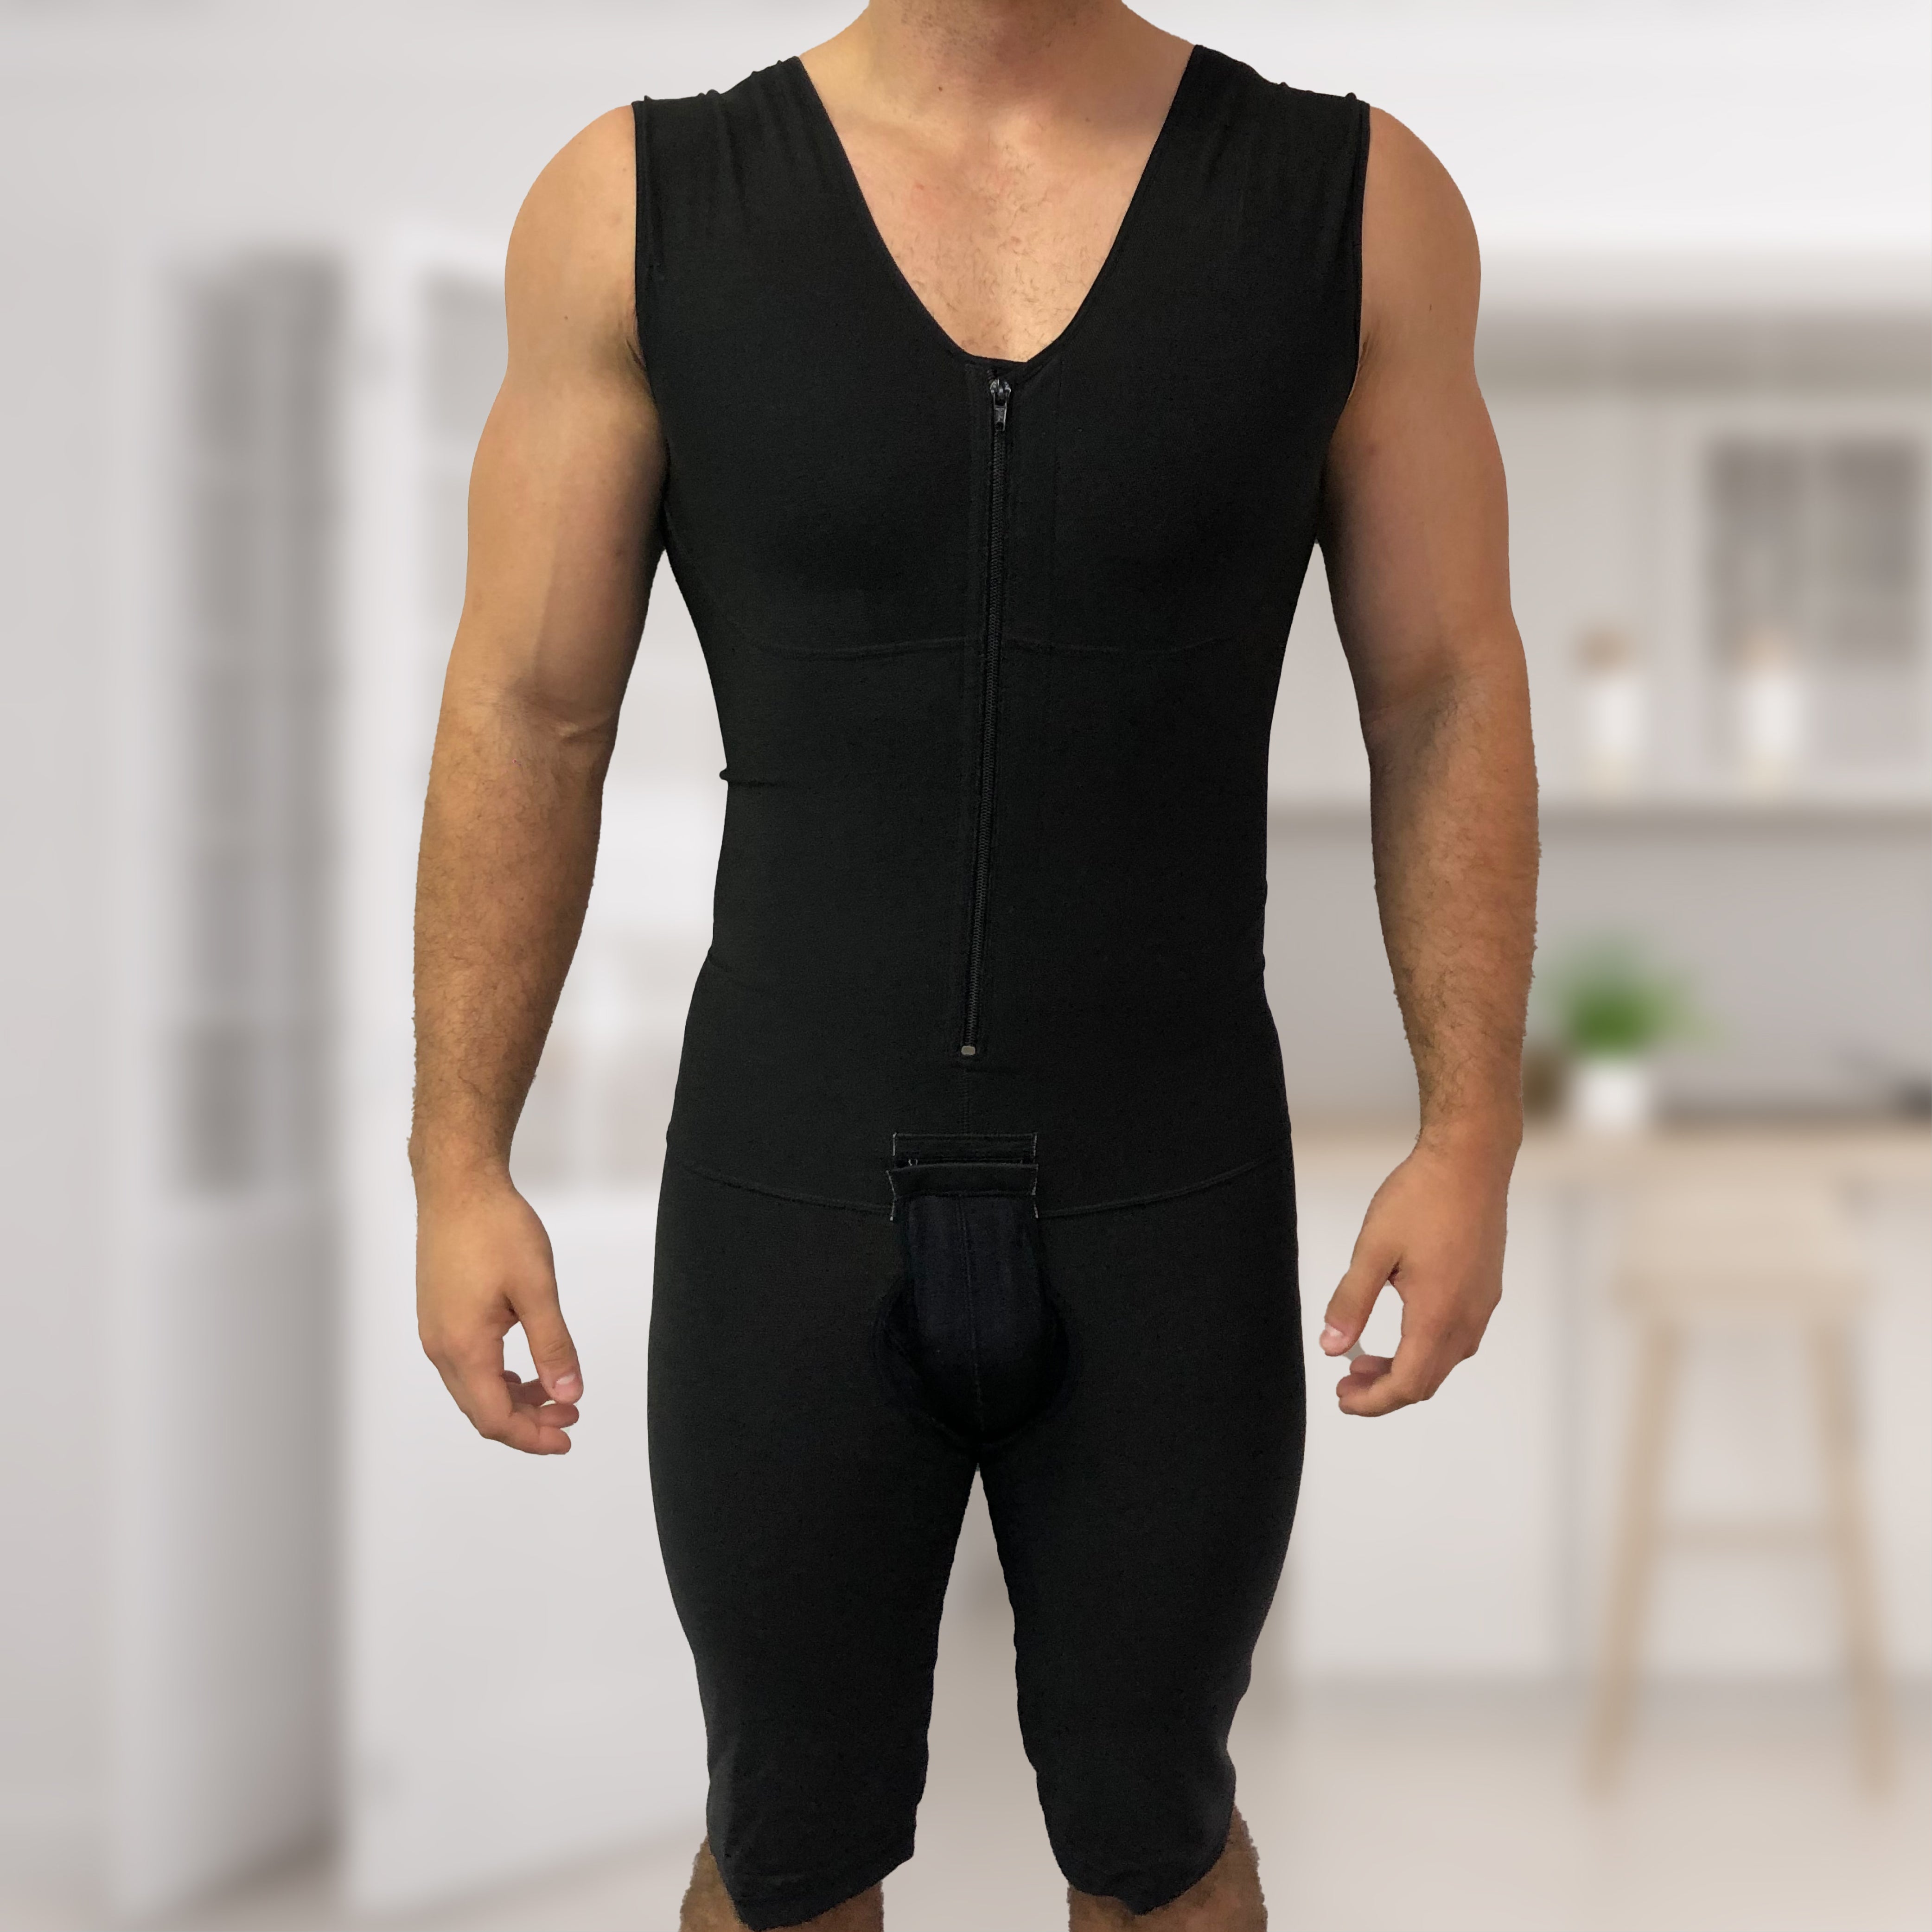 Frontal view of a man wearing a black body garment